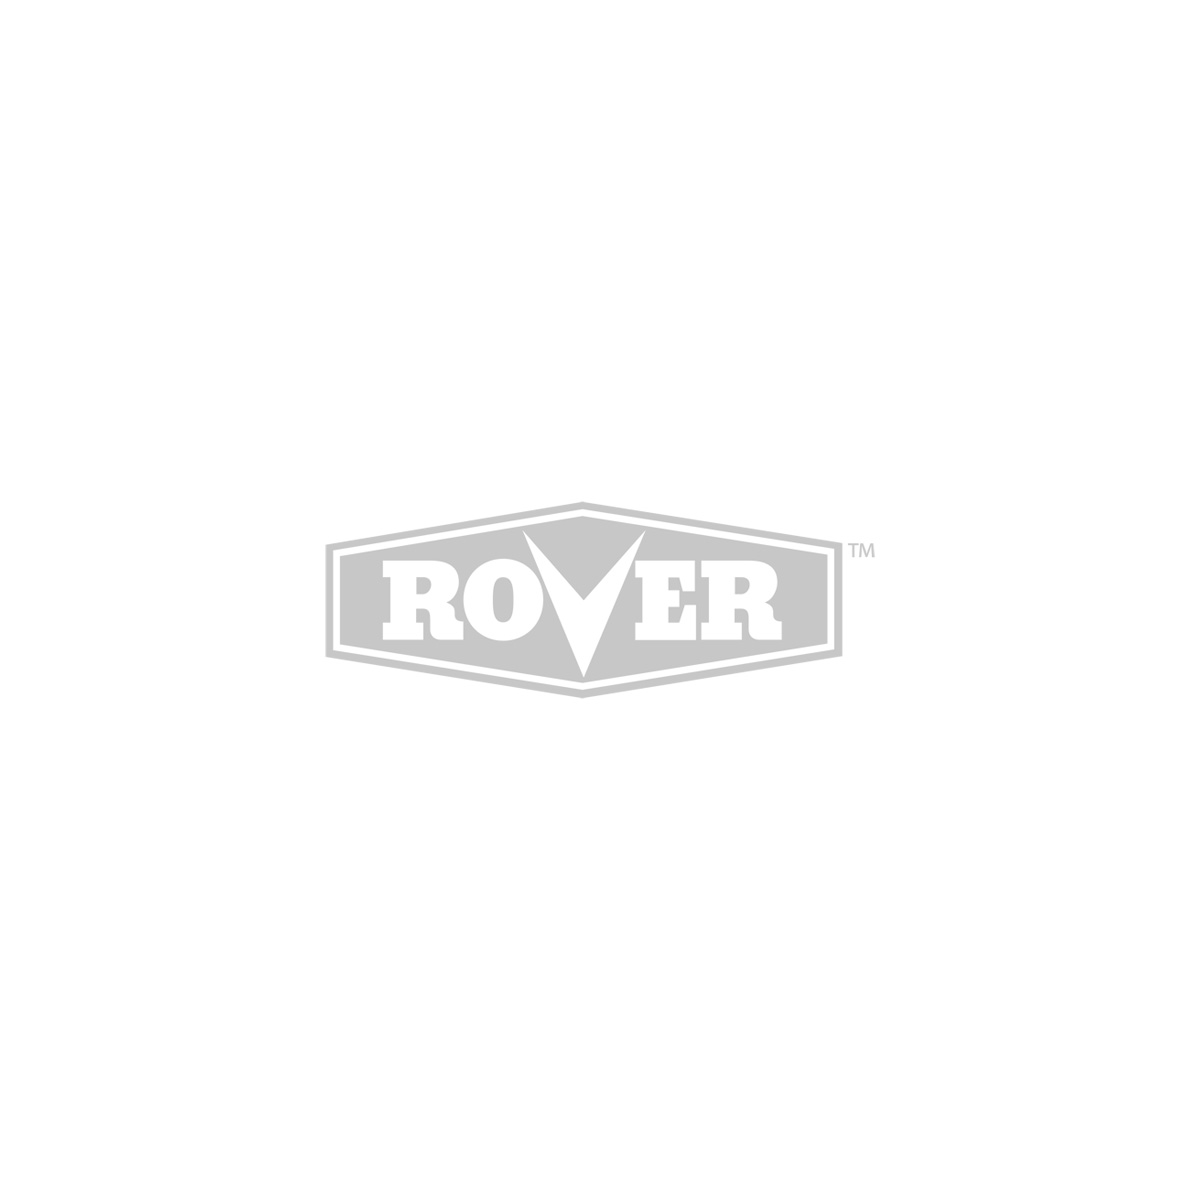 Rover 1 Litre Semi Synthetic 2T Oil